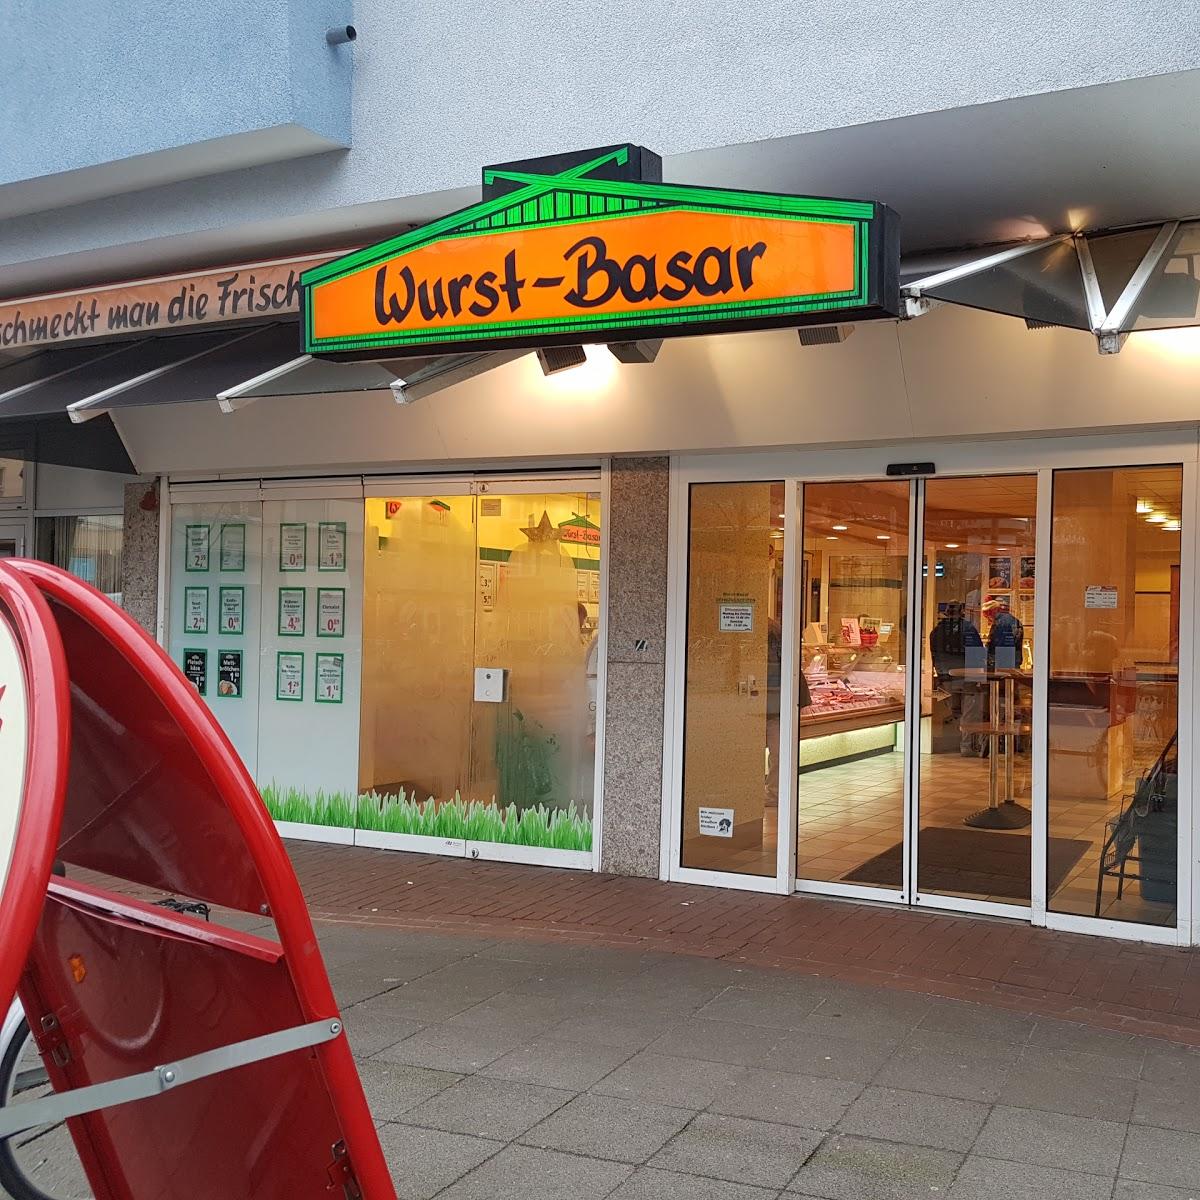 Restaurant "Wurst-Basar" in Hannover